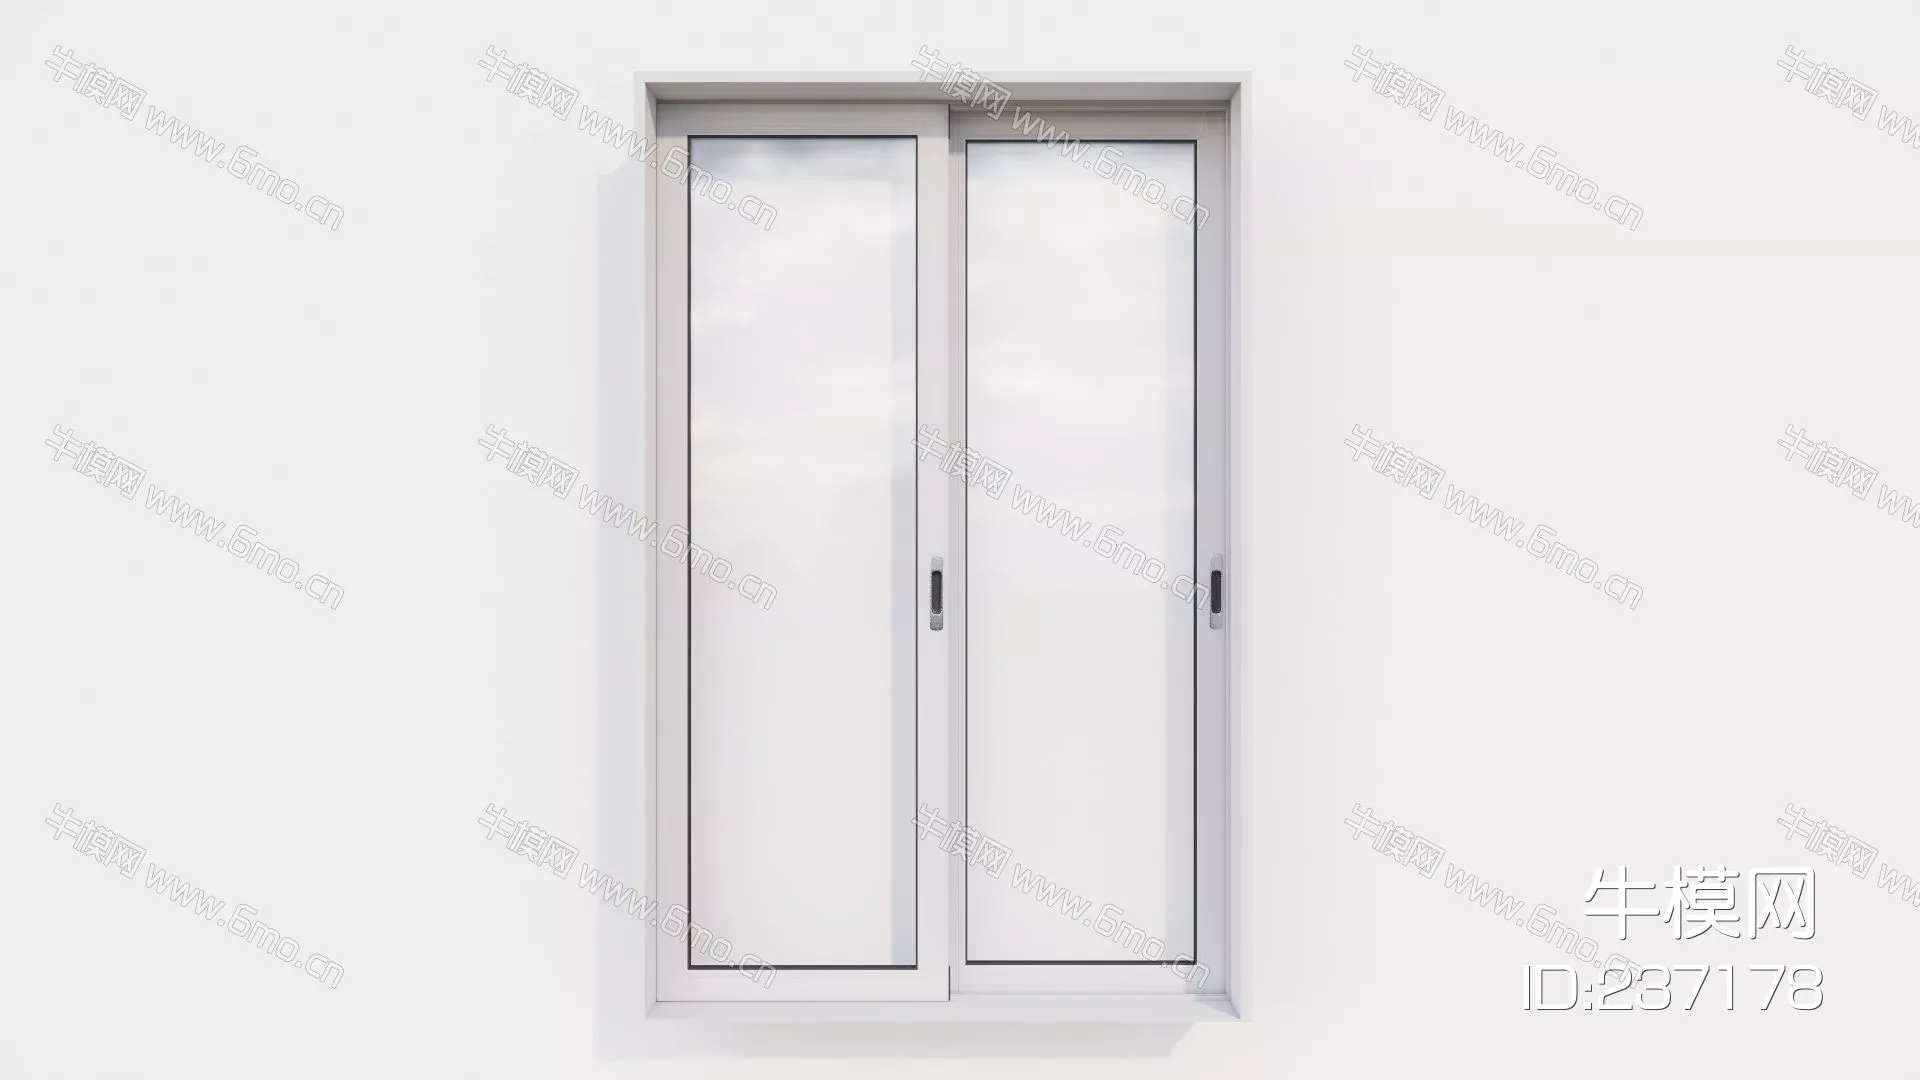 MODERN DOOR AND WINDOWS - SKETCHUP 3D MODEL - ENSCAPE - 237178